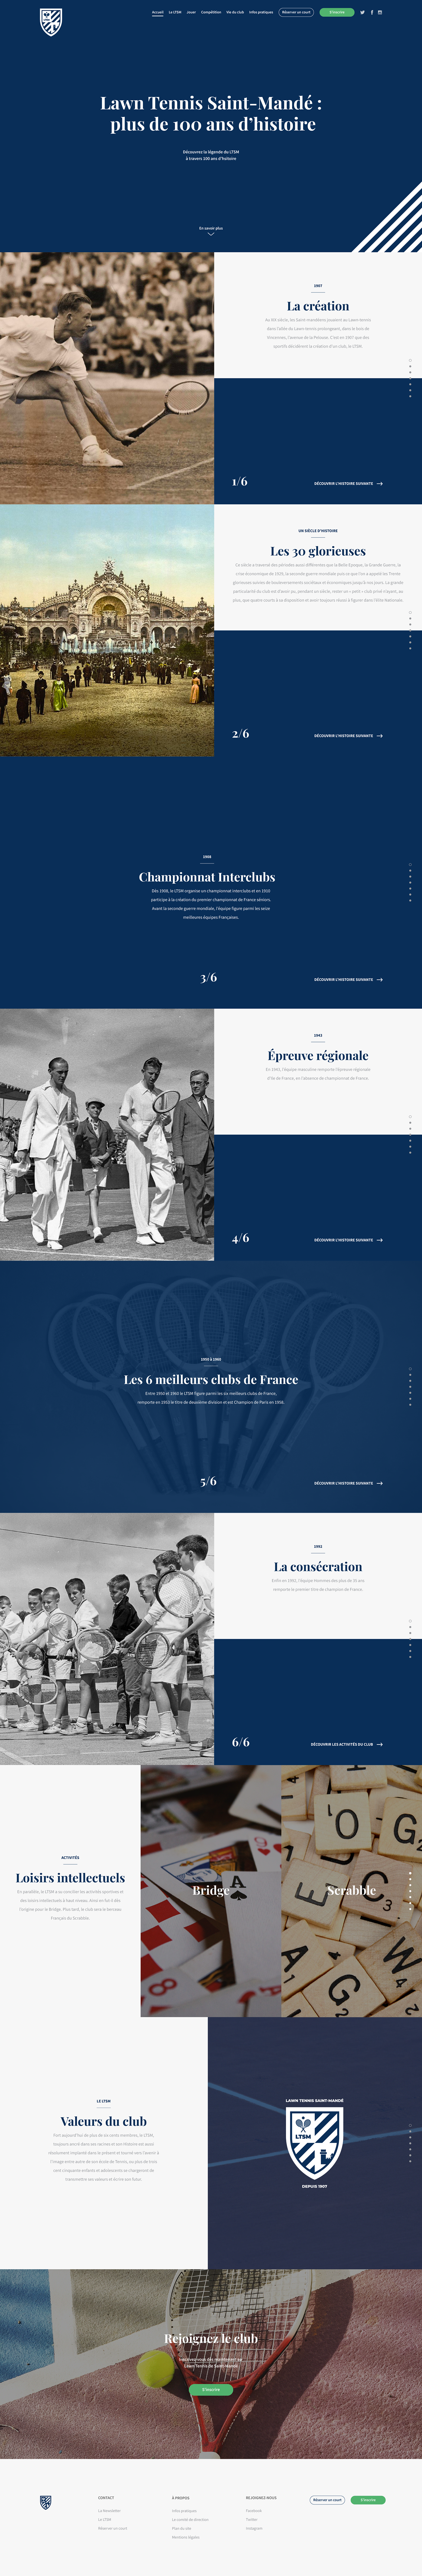 branding  indentity Web site web Interface wordpress charte graphique logo direction artistique tennis